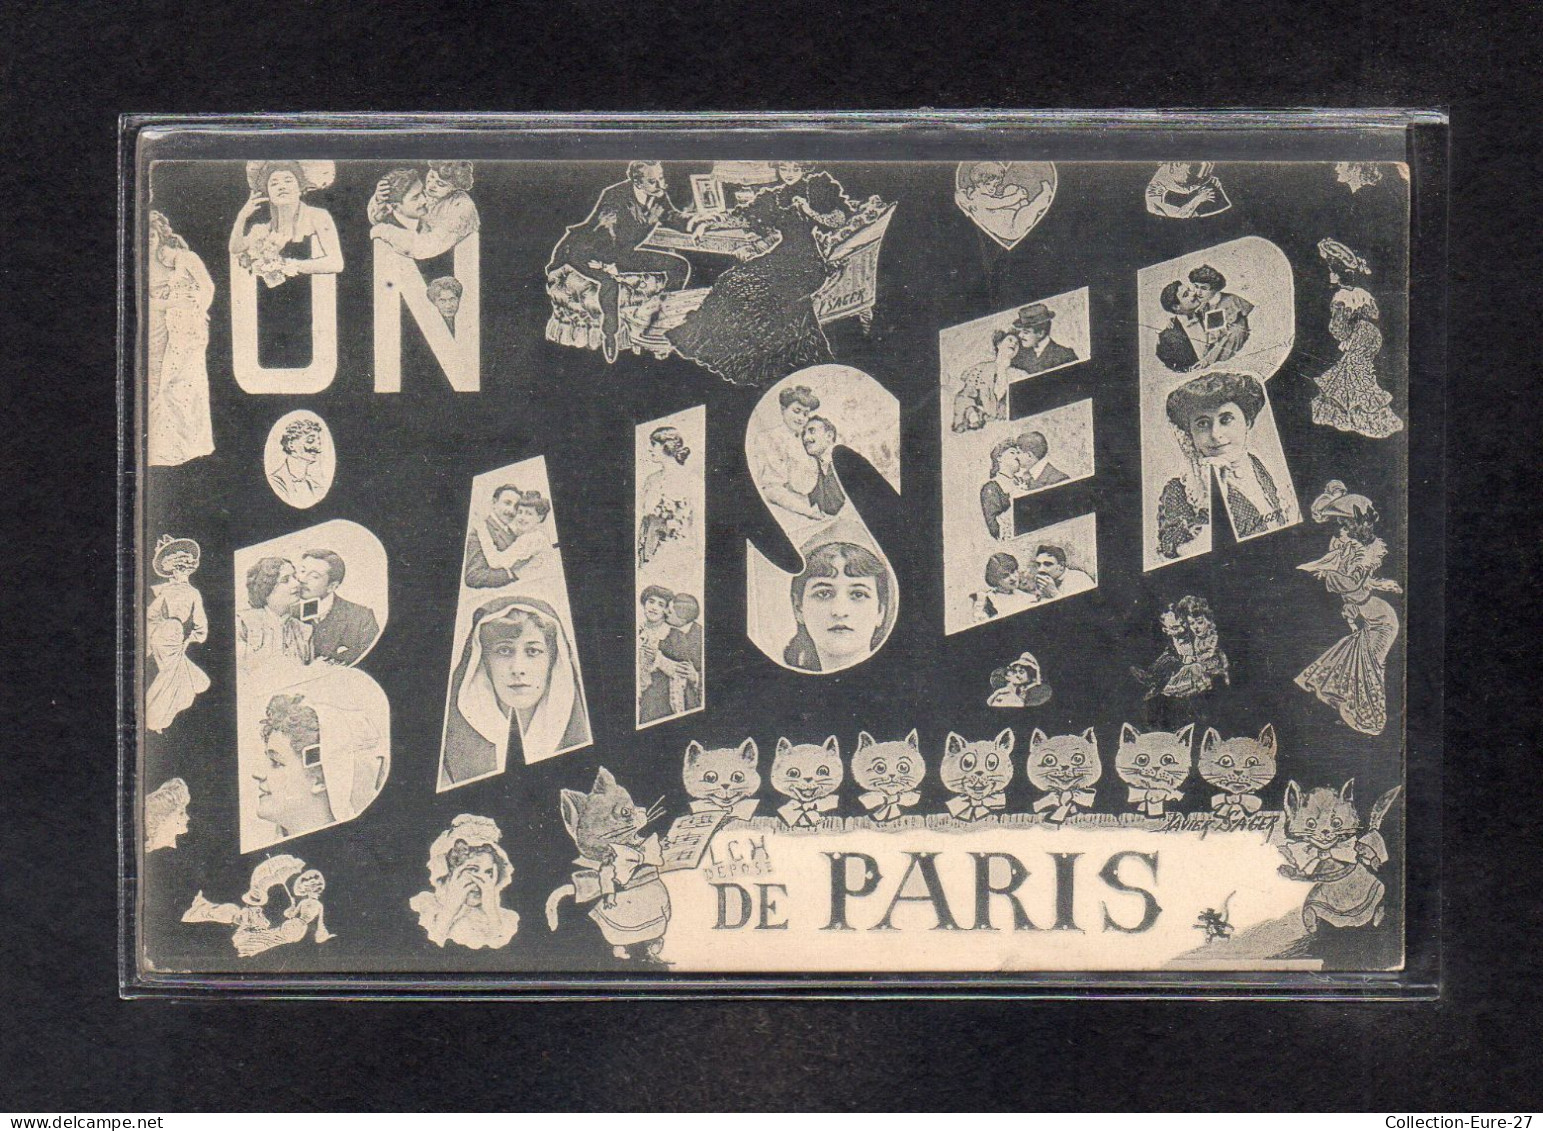 (09/05/24) THEME ILLUSTRATEURS-CPA SIGNEE XAVIER SAGER - UN BAISER DE PARIS - Sager, Xavier